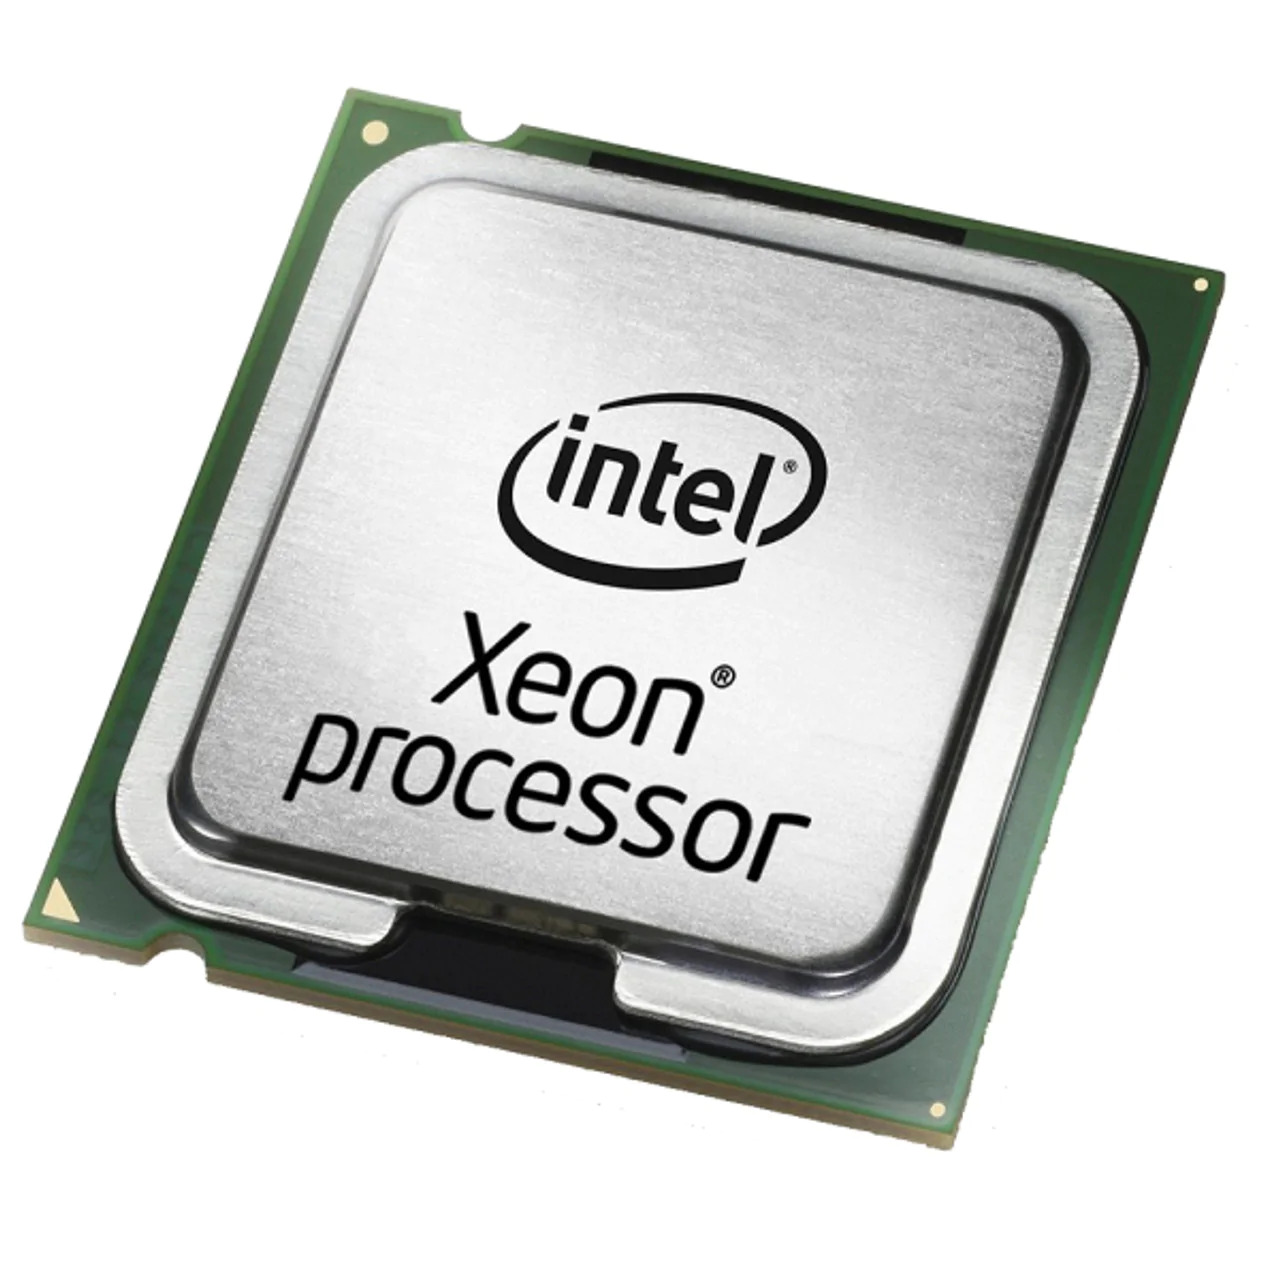 Intel Xeon X5650 CPU 2.66GHz 12MB 6.4GT/s Hexa 6 Core Processor - SLBV3